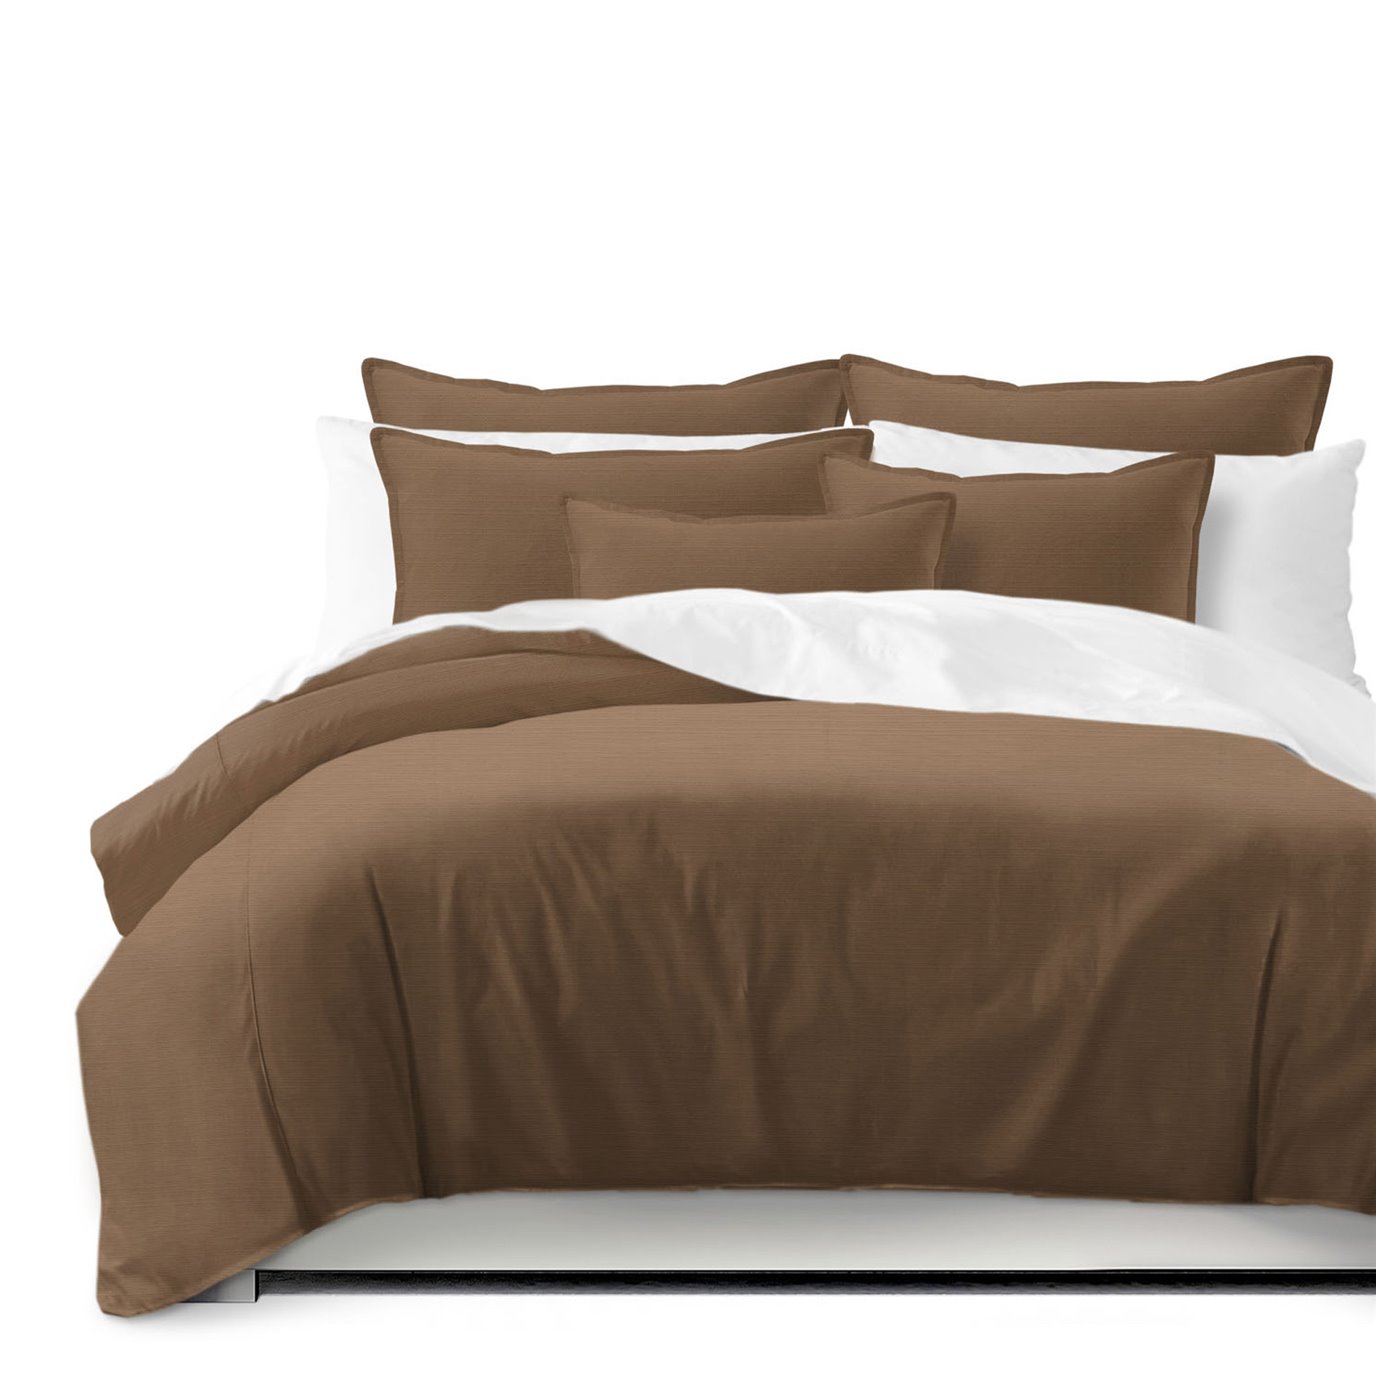 Nova Walnut Comforter and Pillow Sham(s) Set - Size Full